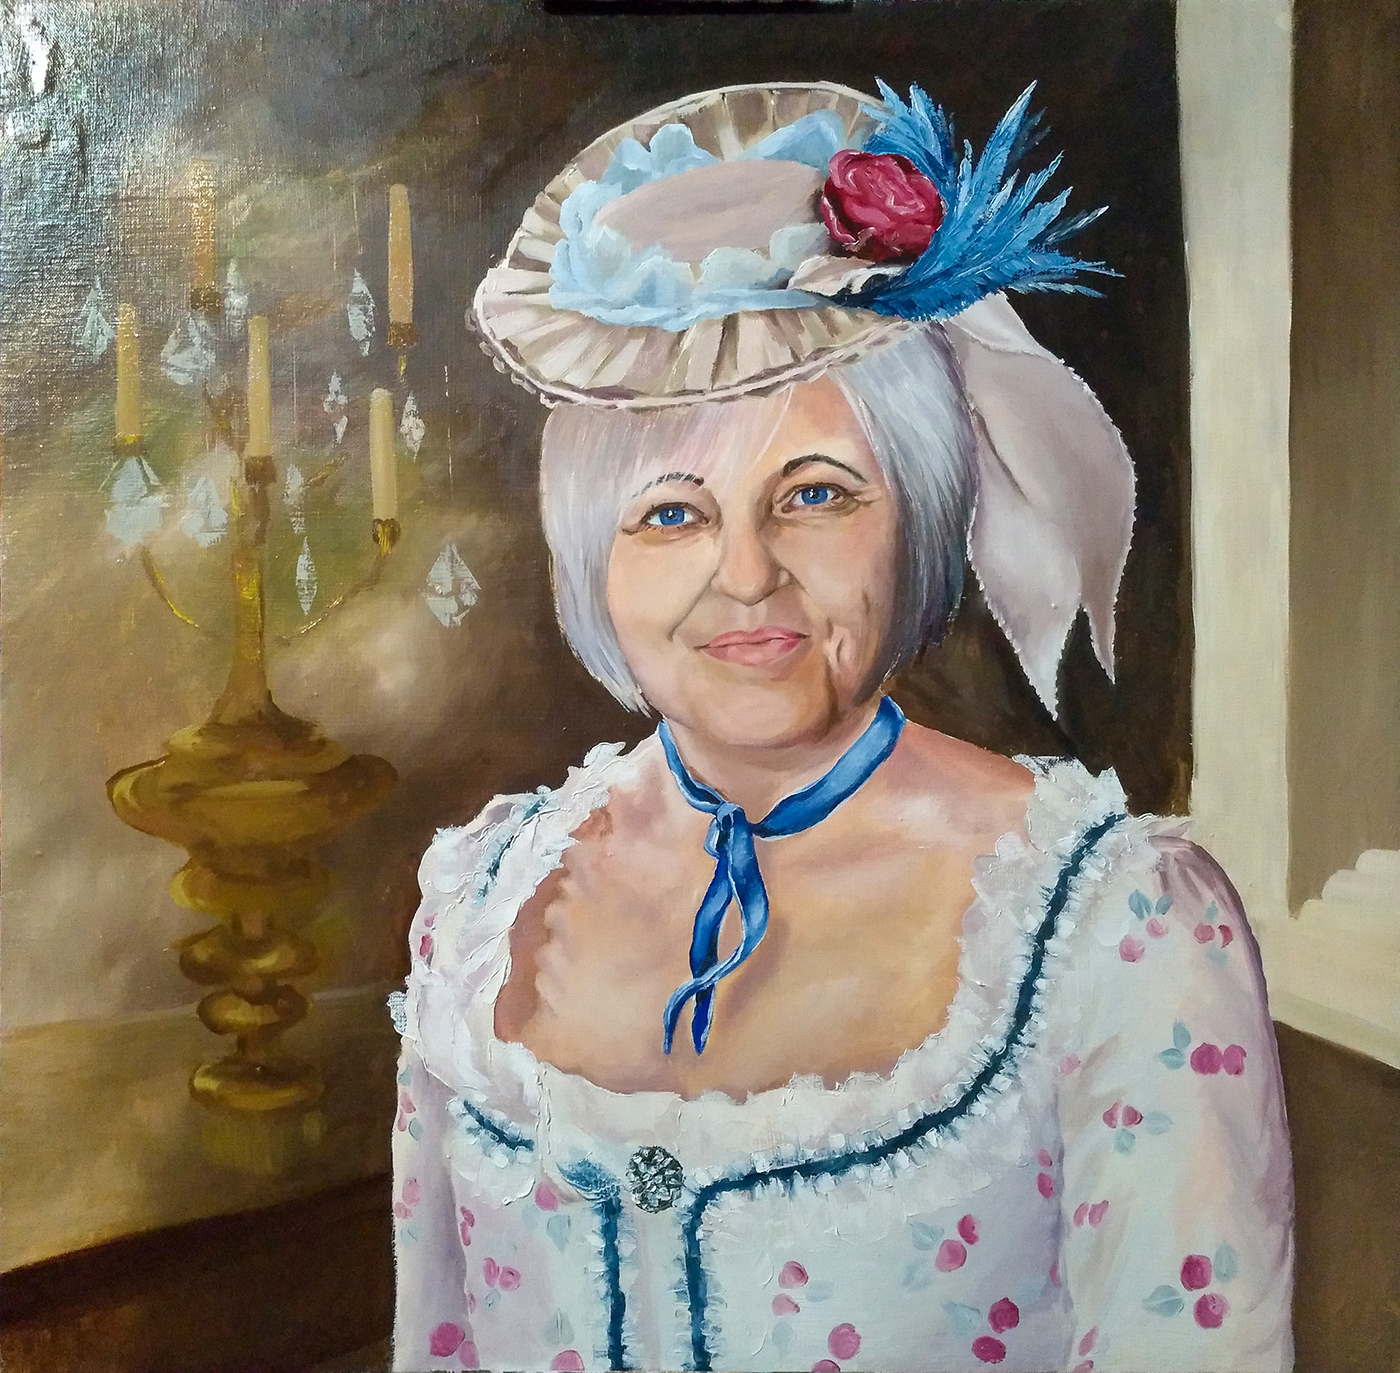 oil portrait thoughtfulness задумчивость масло подарок портрет painting   dry pastel pancil